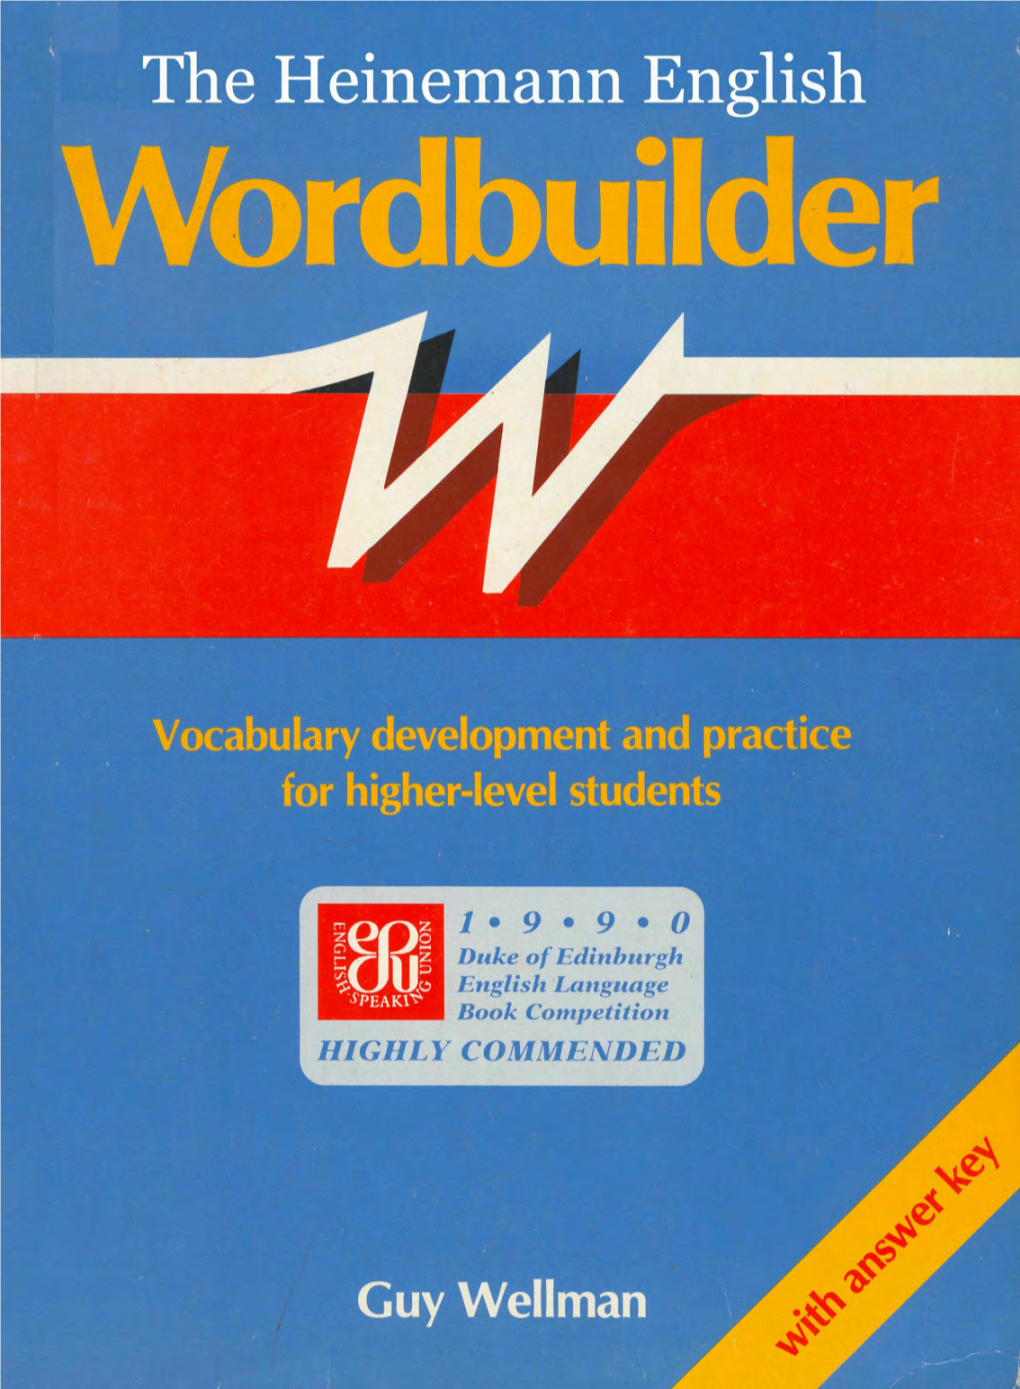 Wordbuilder.Pdf